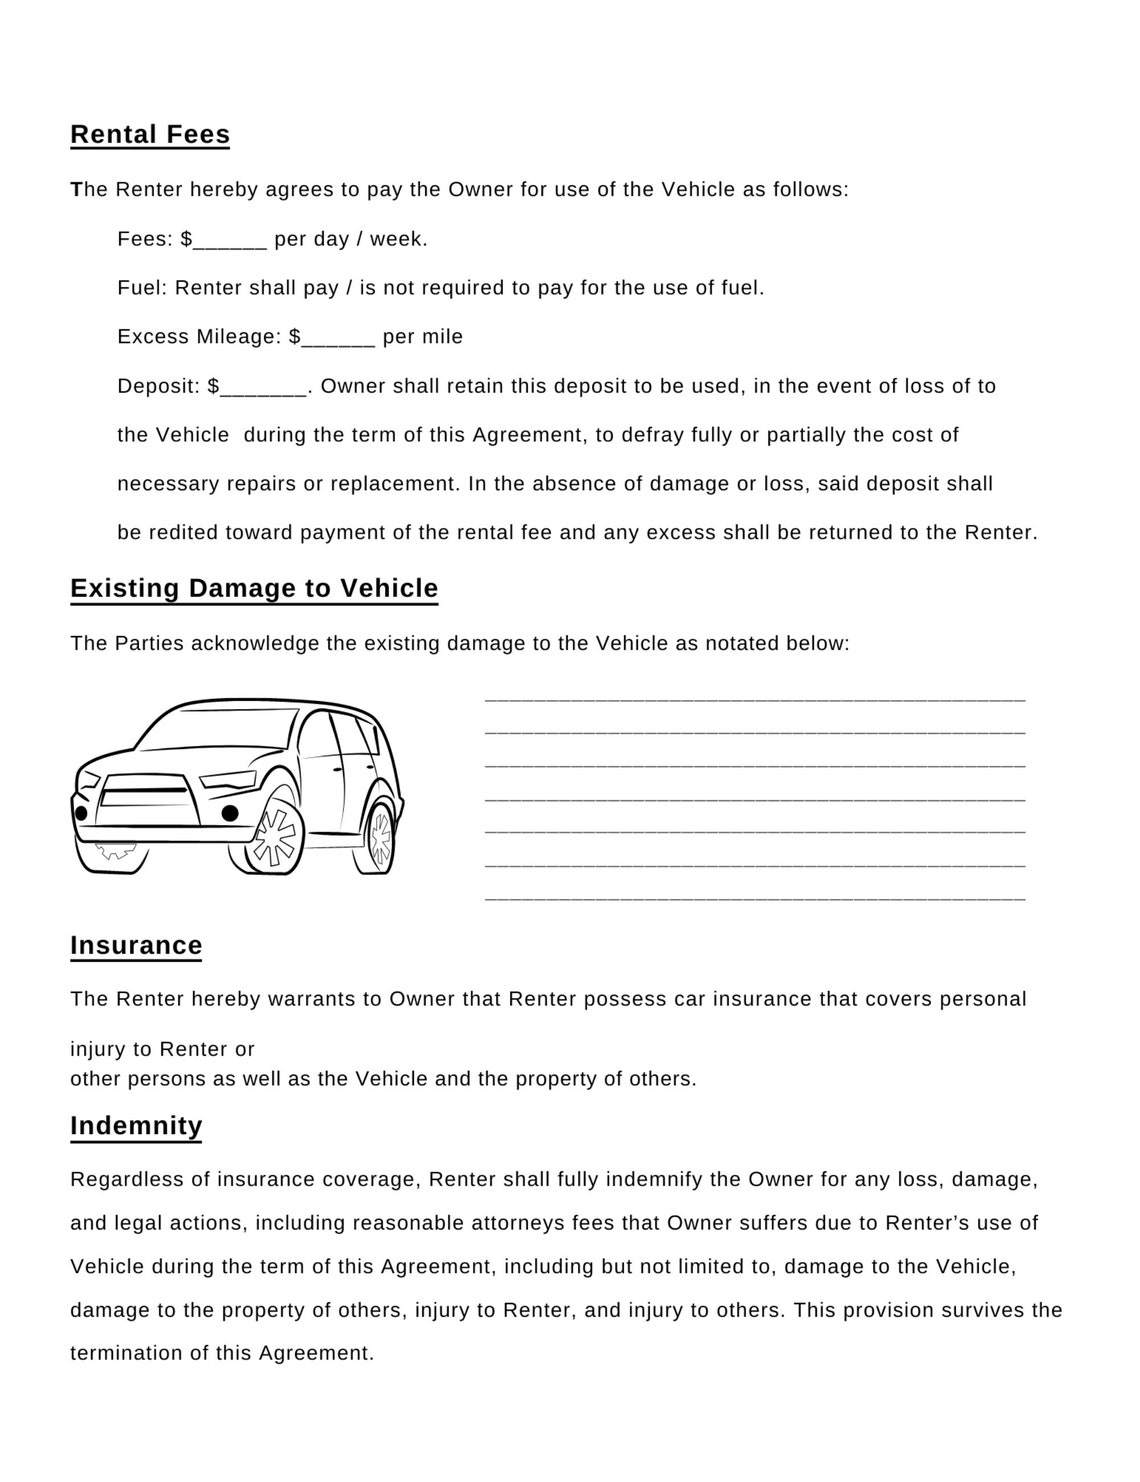 printable-car-rental-agreement-vehicle-rental-agreement-etsy